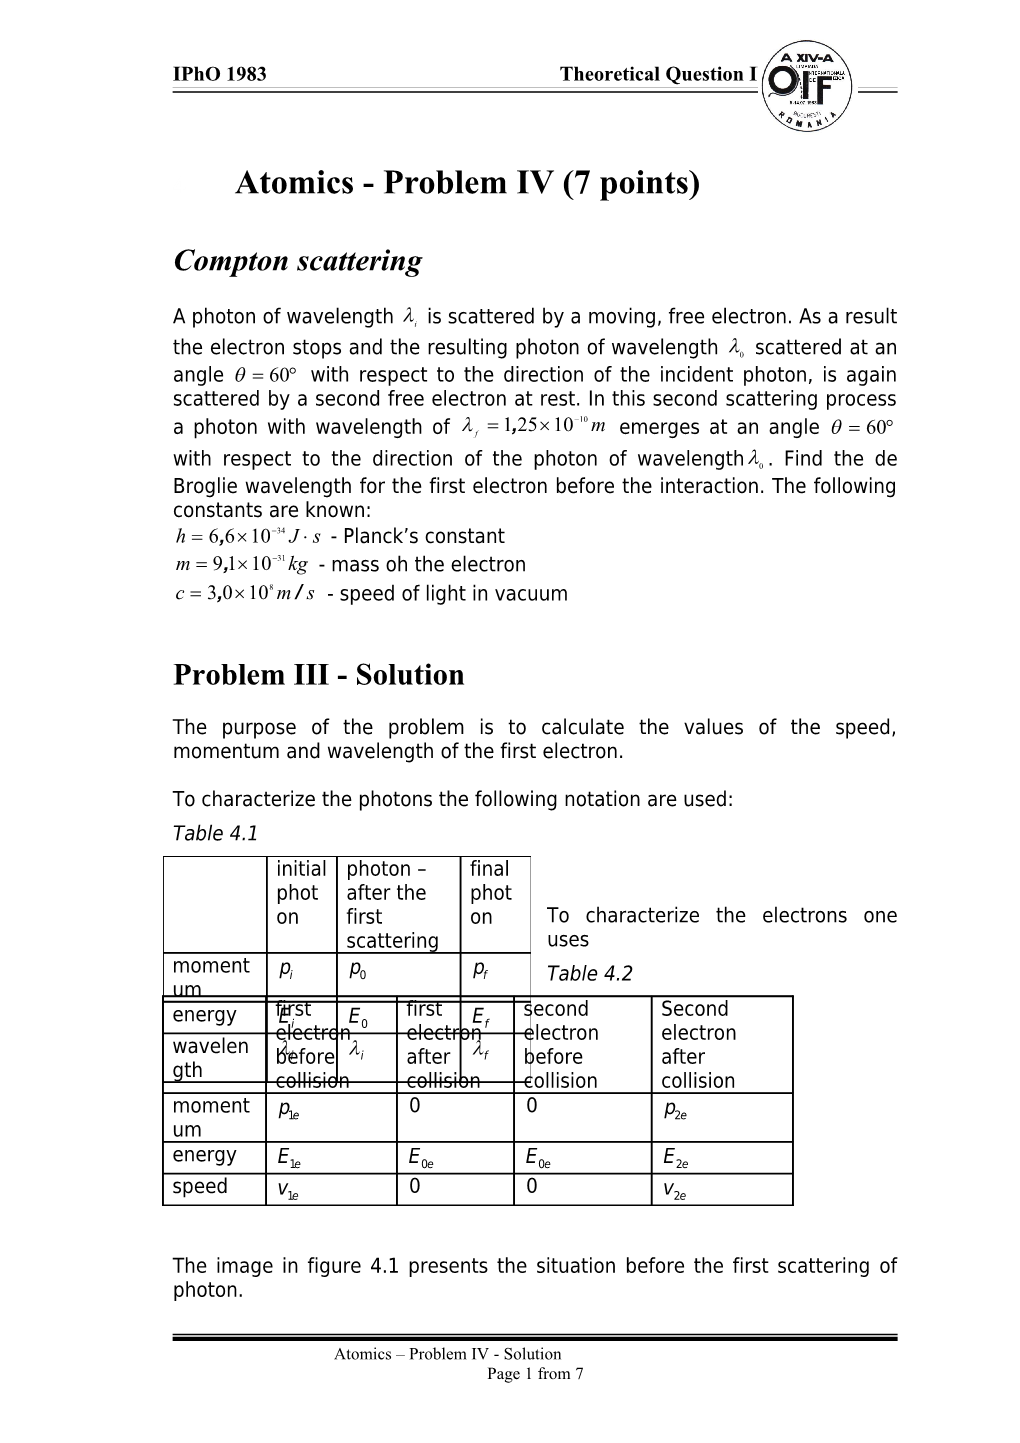 4. Atomics - Problem IV (7 Points)